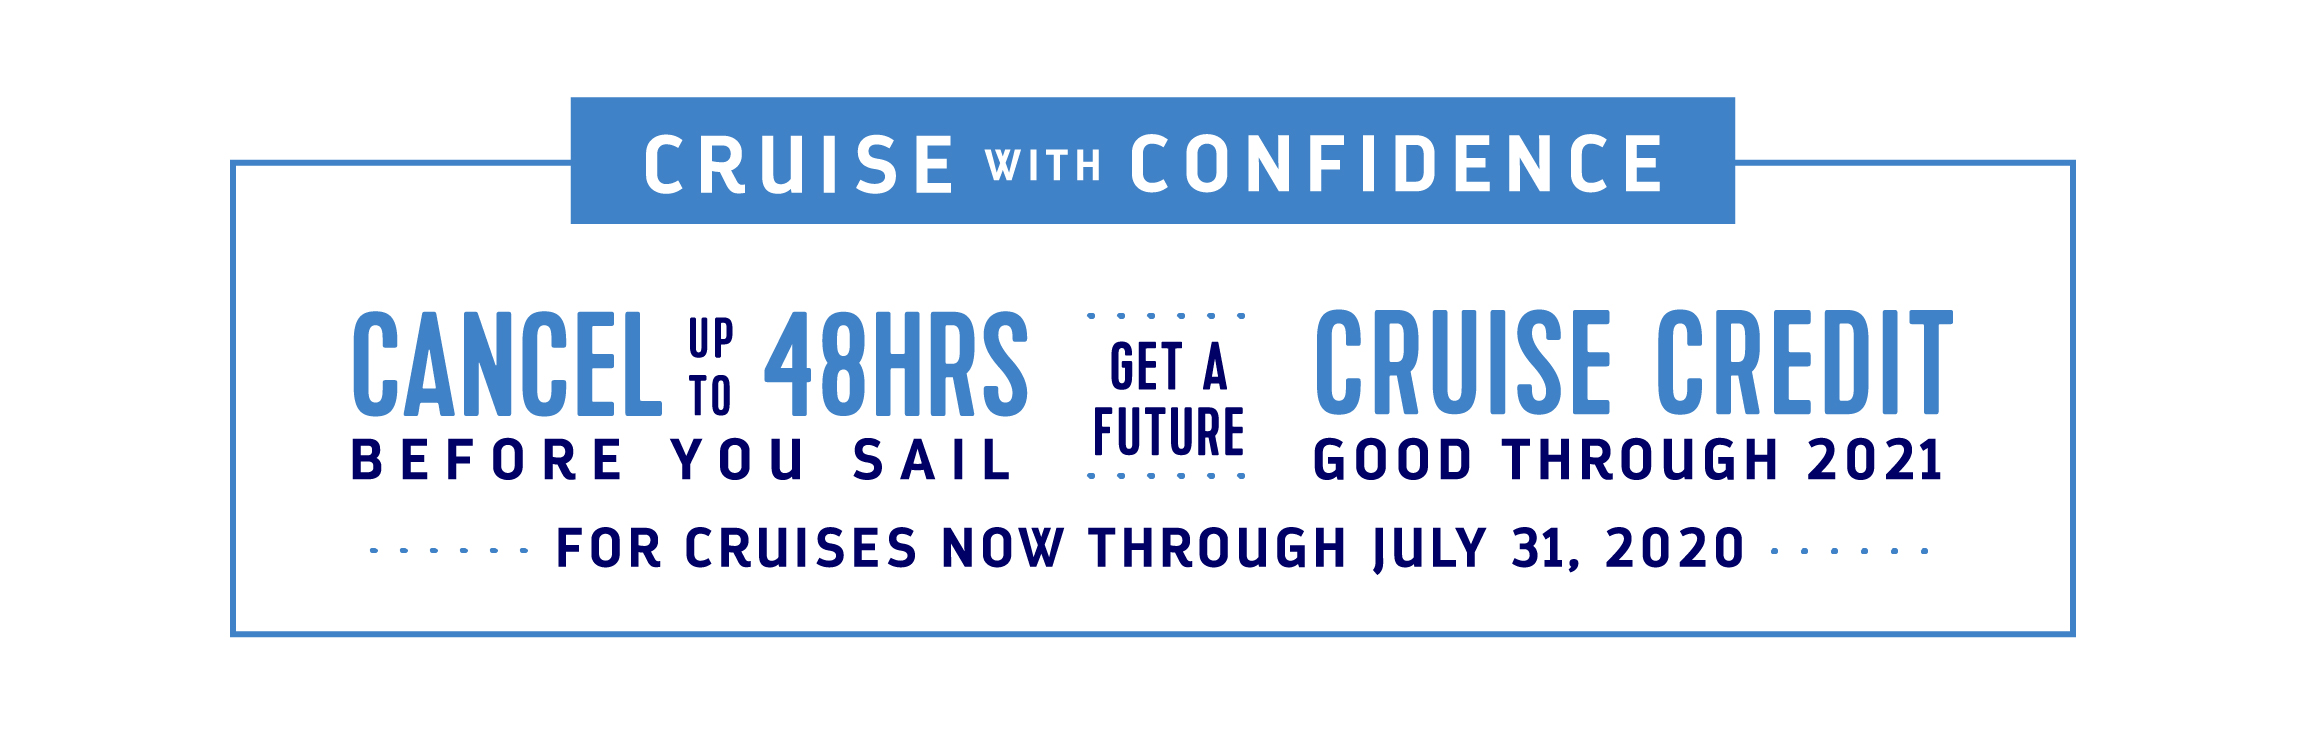 cruise-with-confidence-lockup.jpg